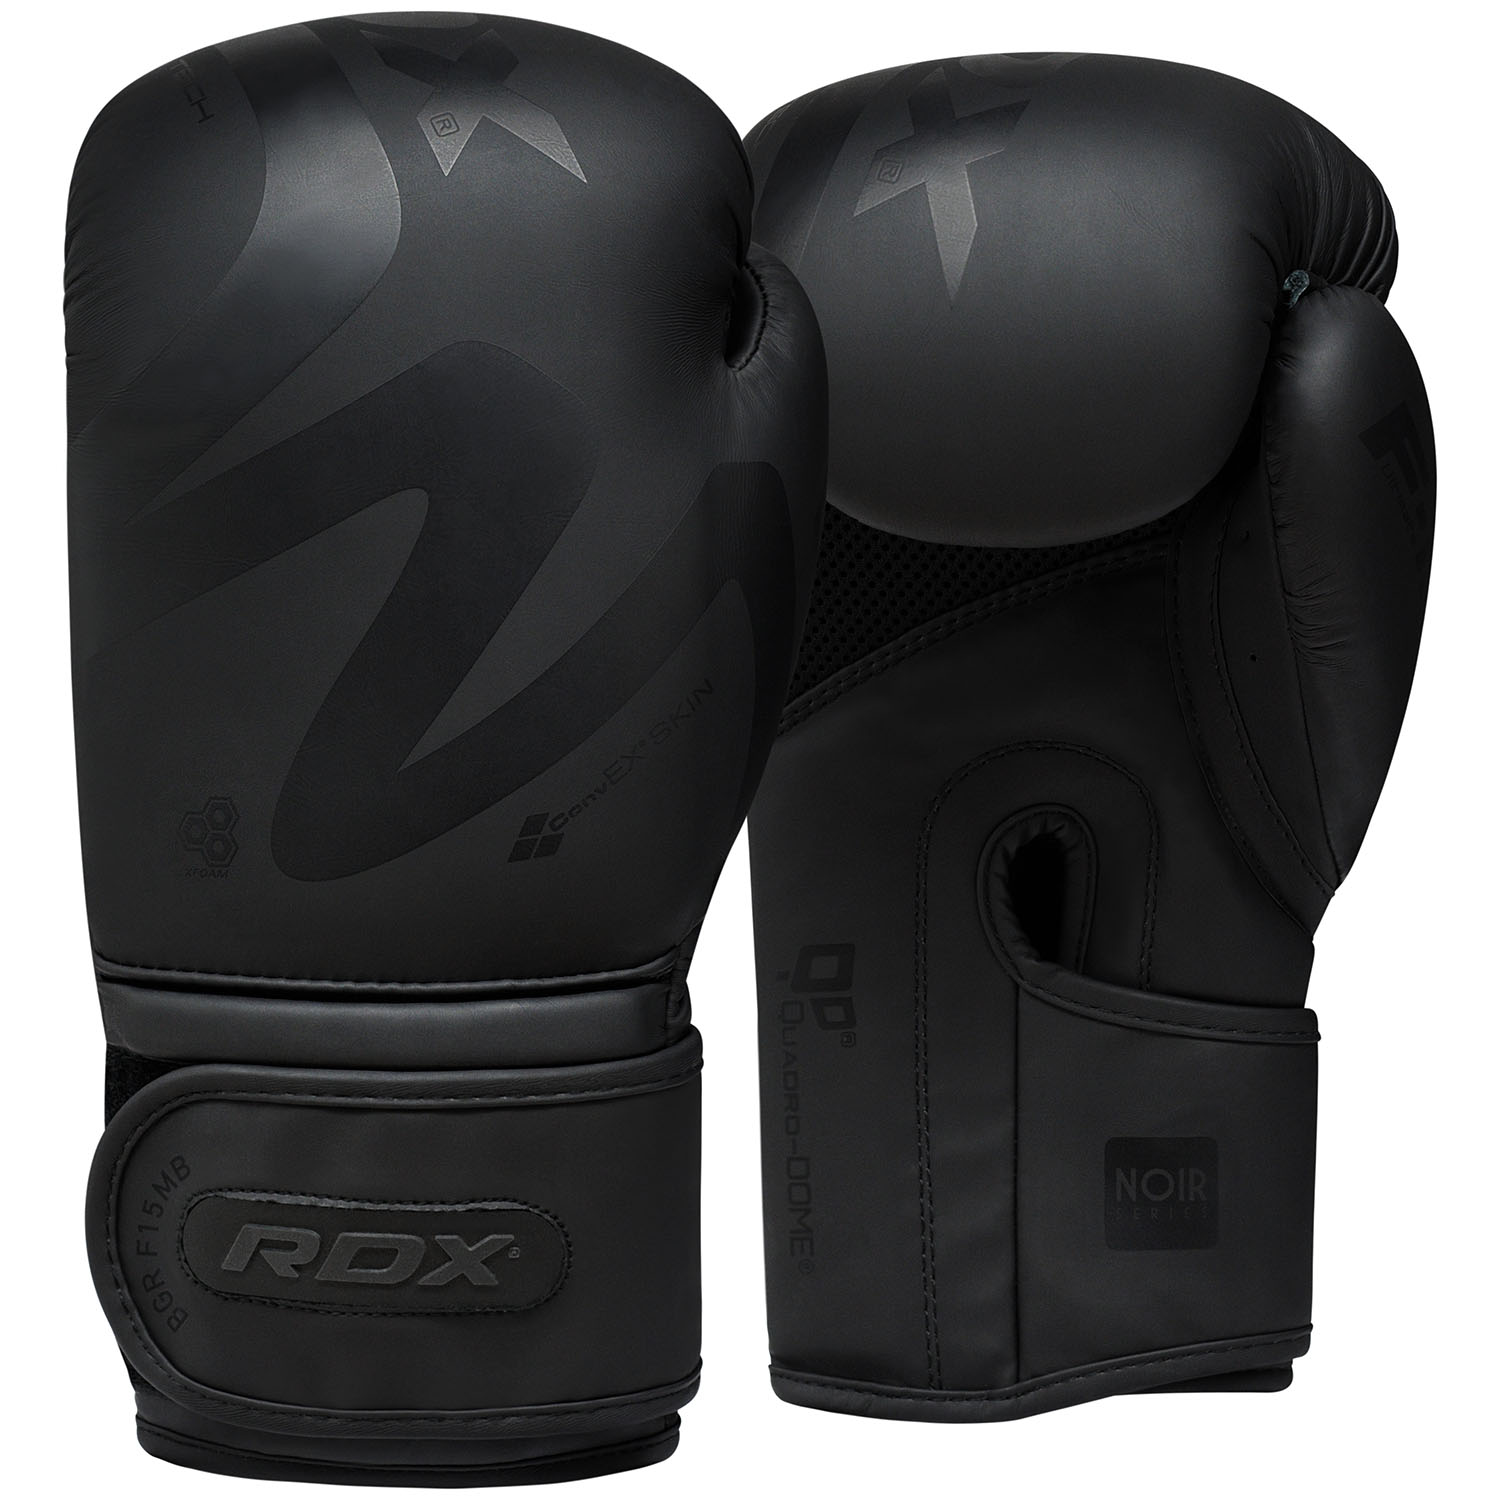 RDX Boxing Gloves, Noir Series F15, black-matt, 10 Oz